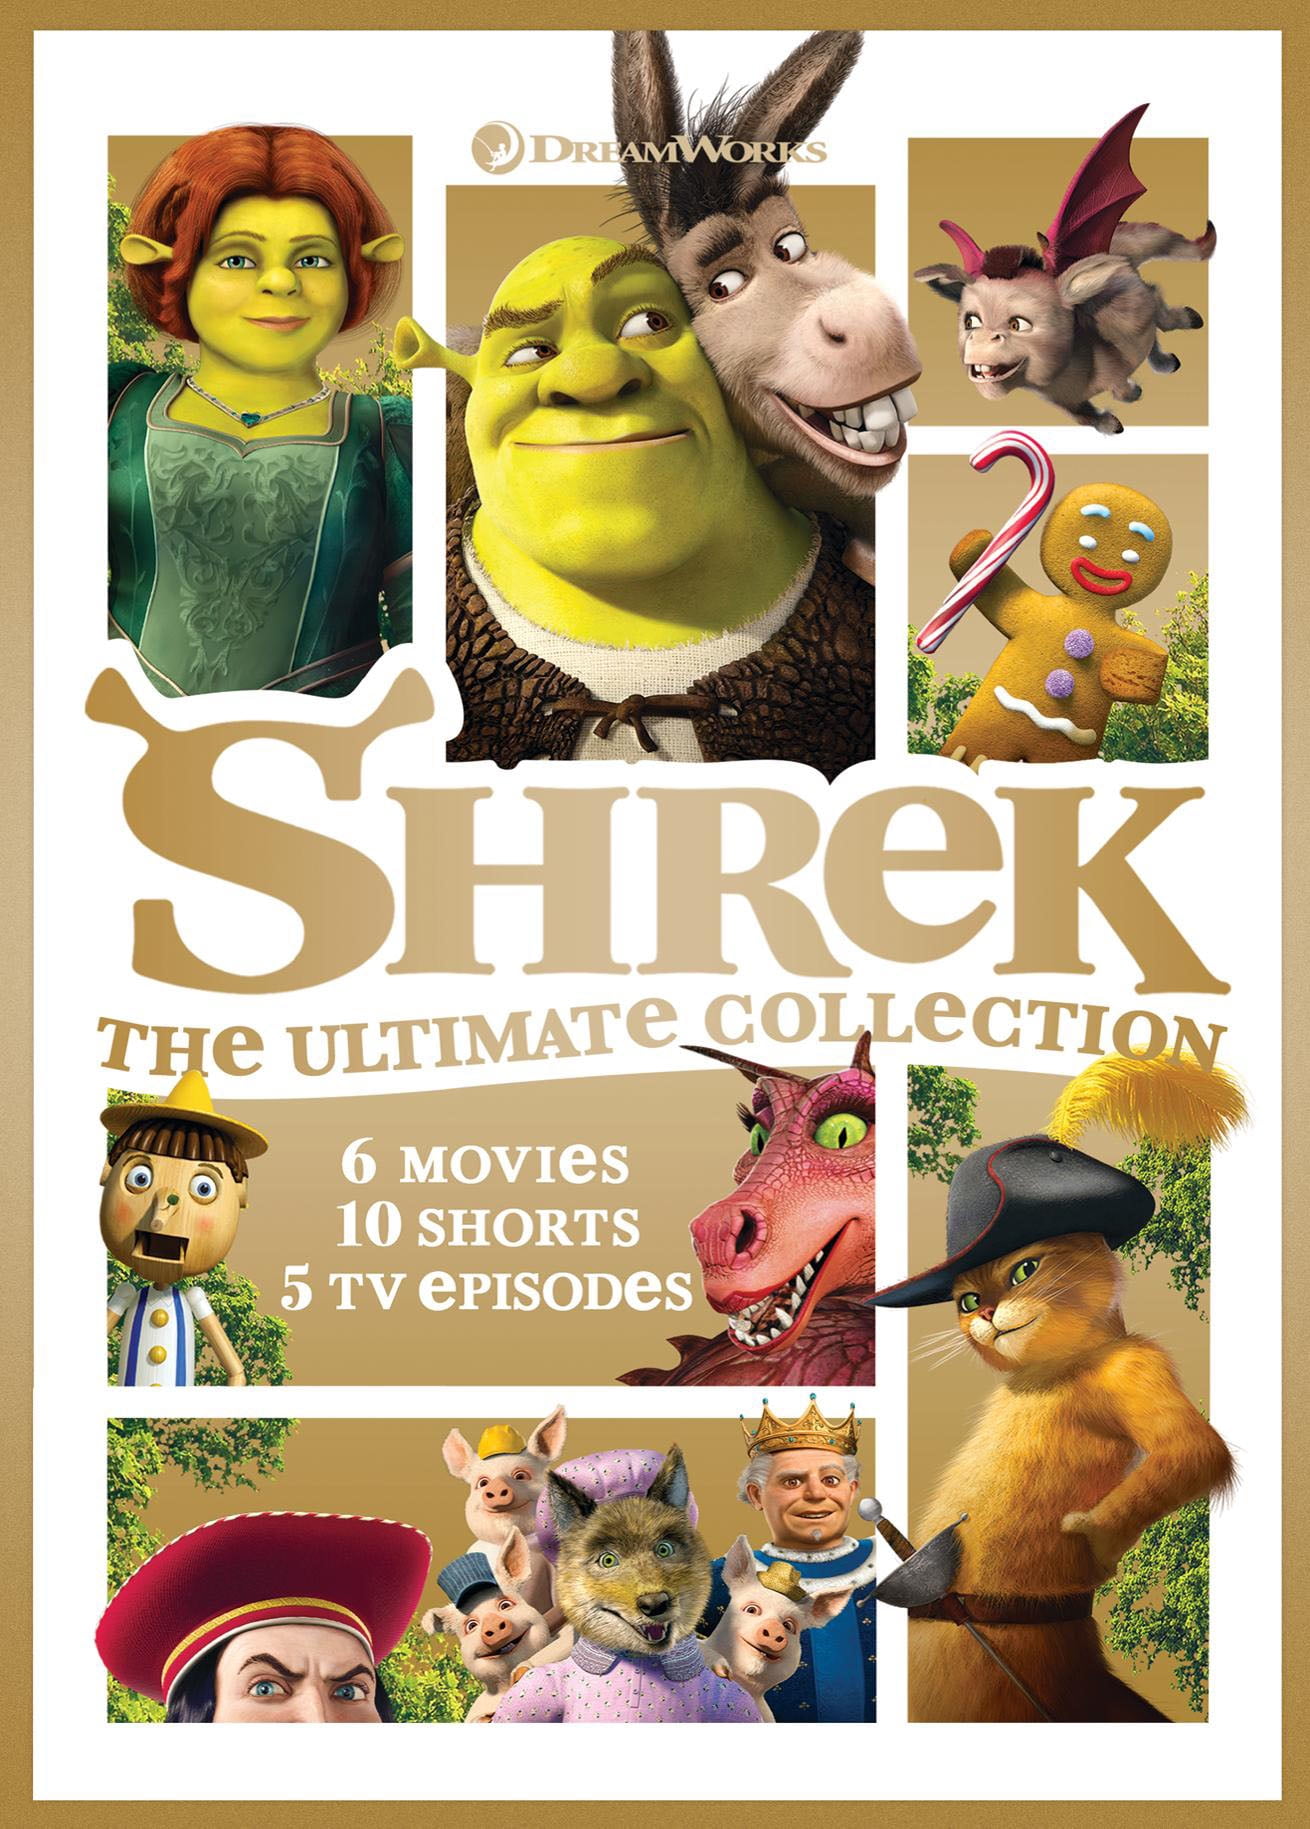 Lot of 5 Paramount DVD Movies (Shrek the Third, Star Trek